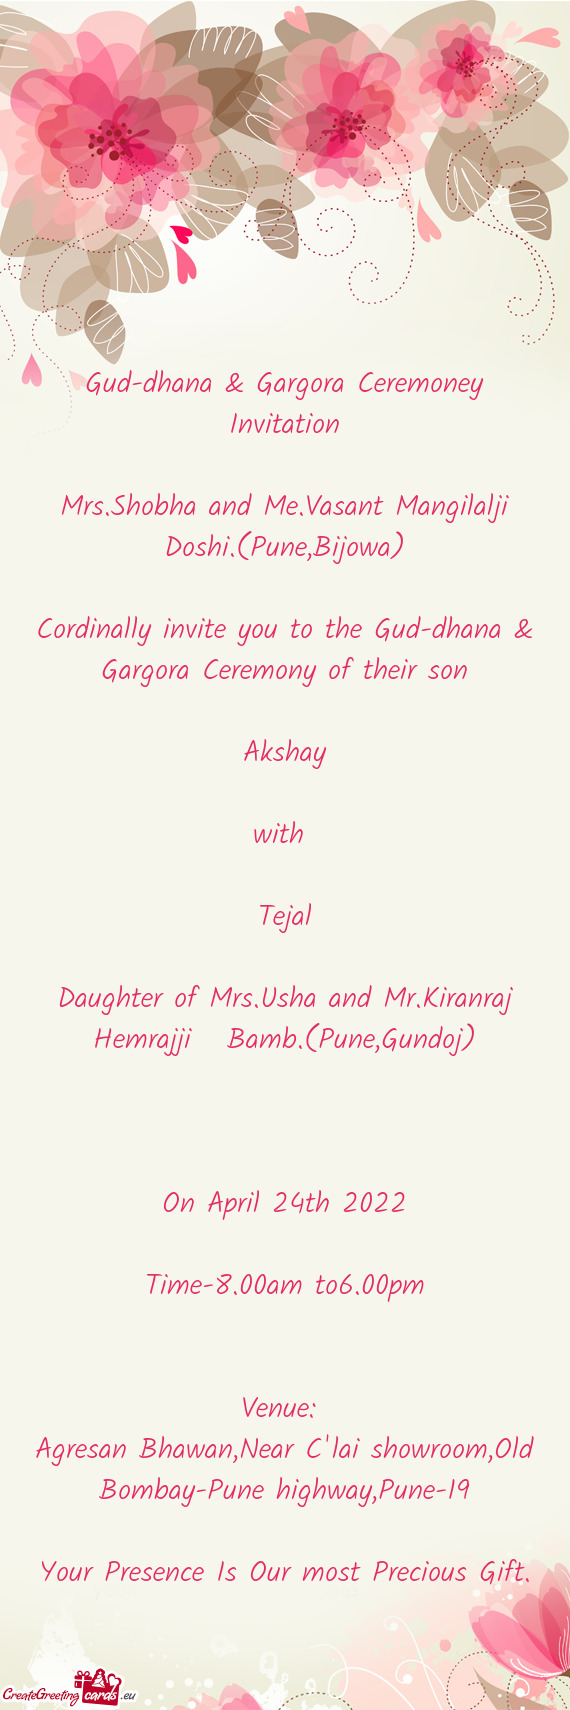 Gud-dhana & Gargora Ceremoney Invitation